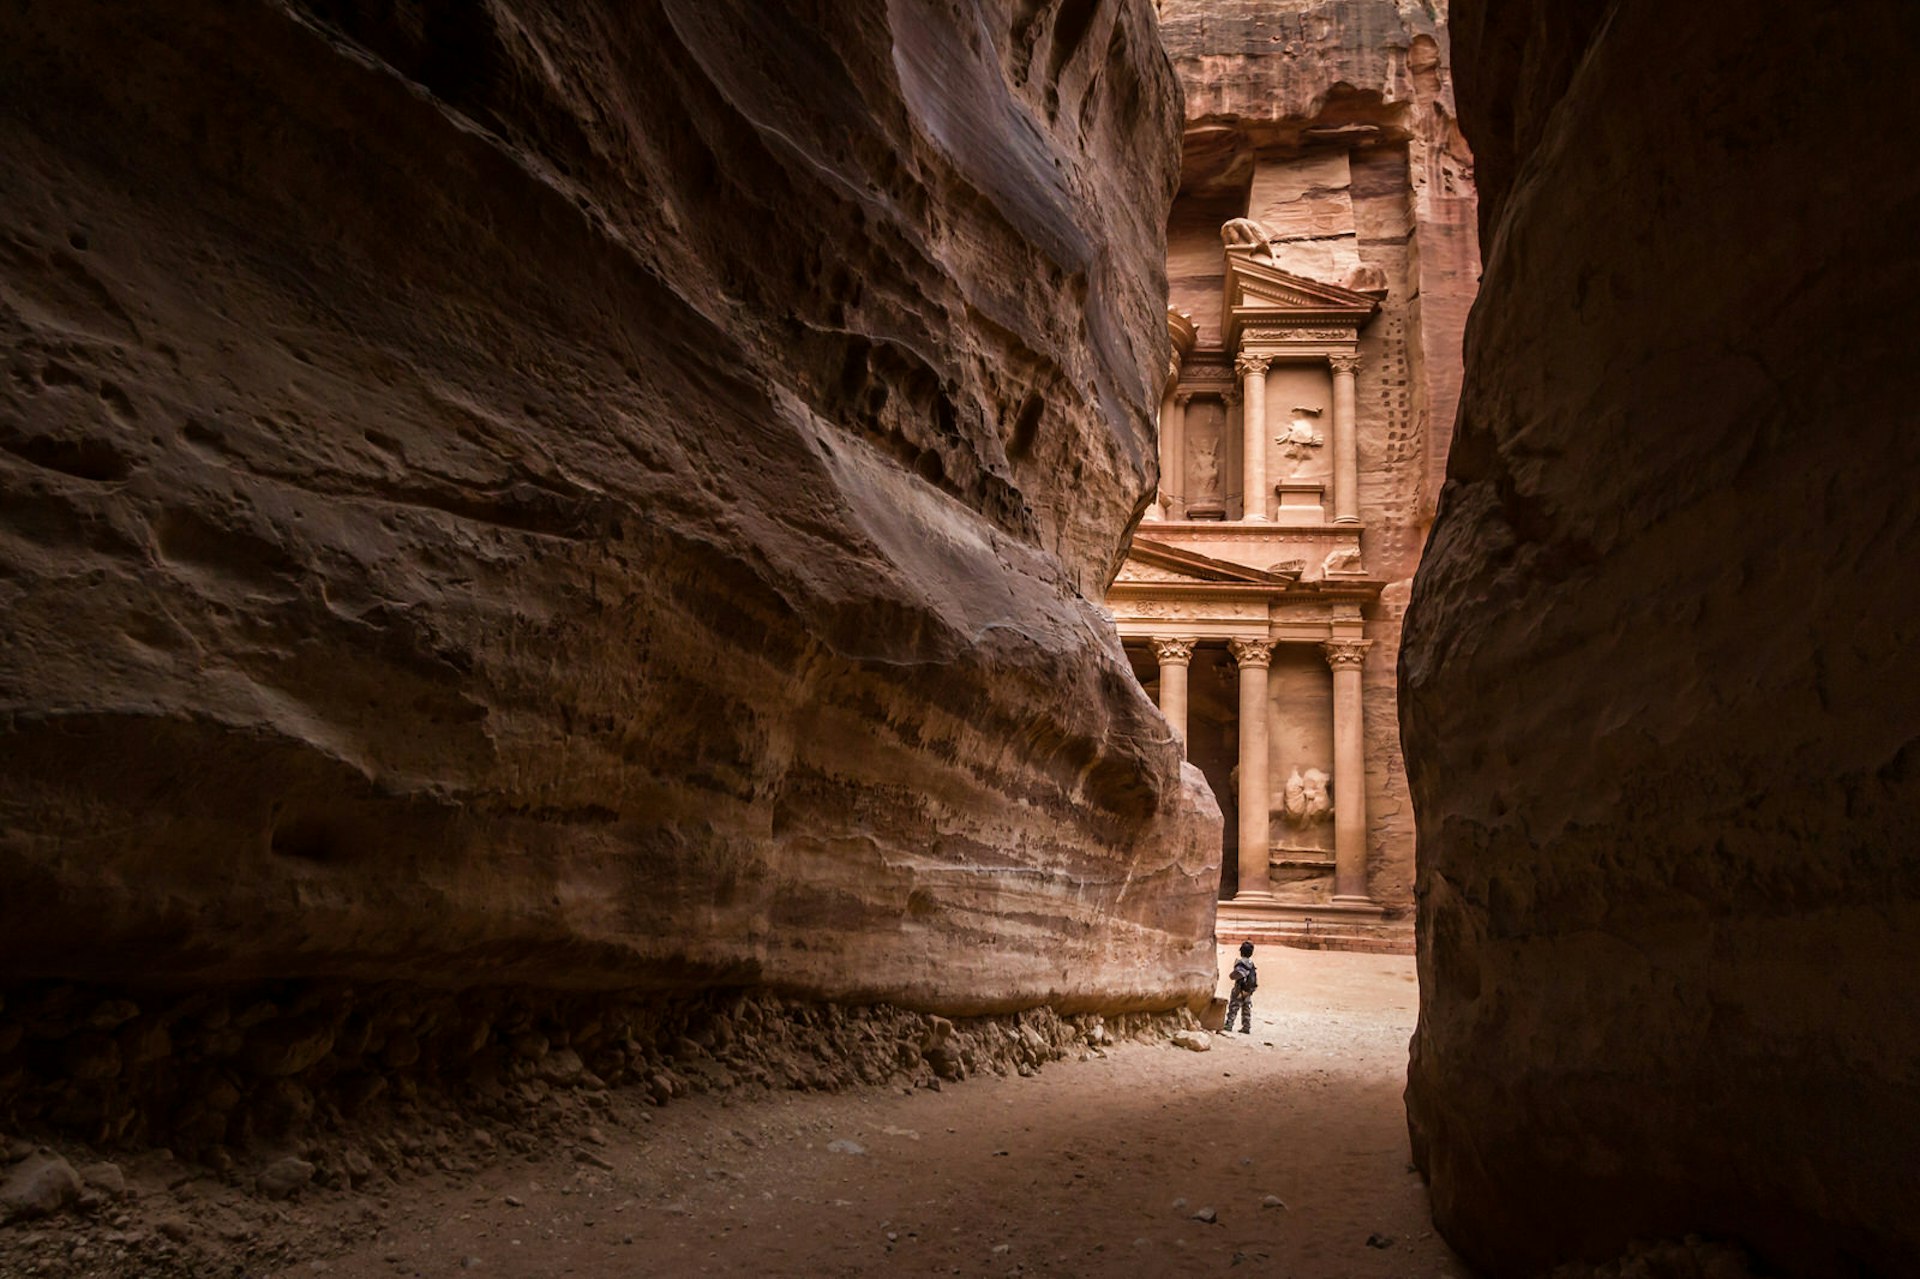 The Treasury at Petra, Jordan. Image by Balint Kasza / 500px